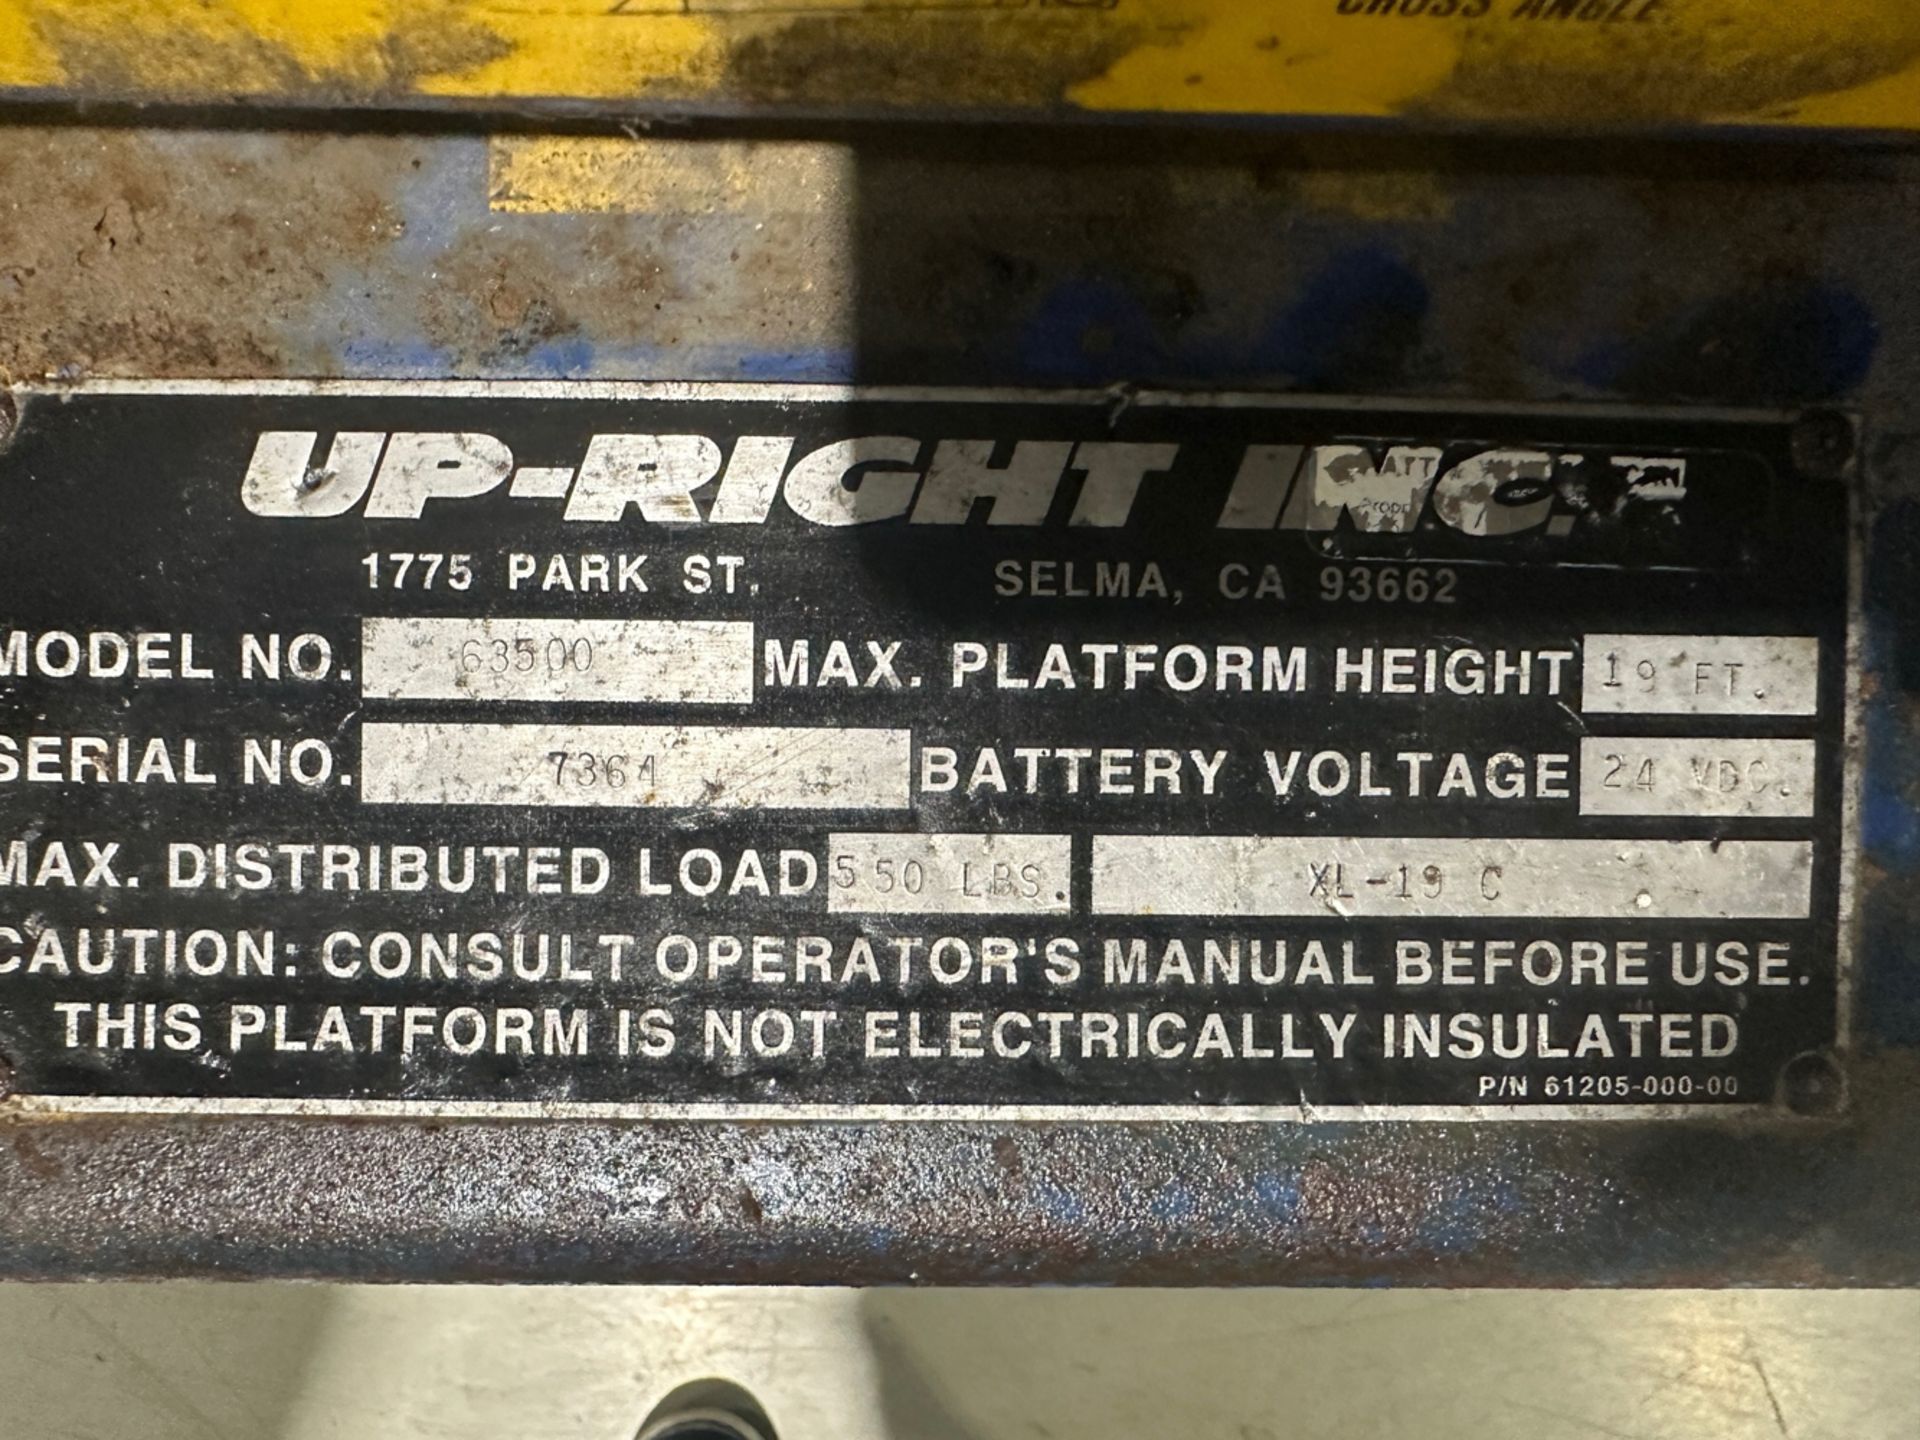 Up-Right Lift Cart, Model: G3500, SN: 7364, Cap: Platform Height 19 ft - Image 4 of 4